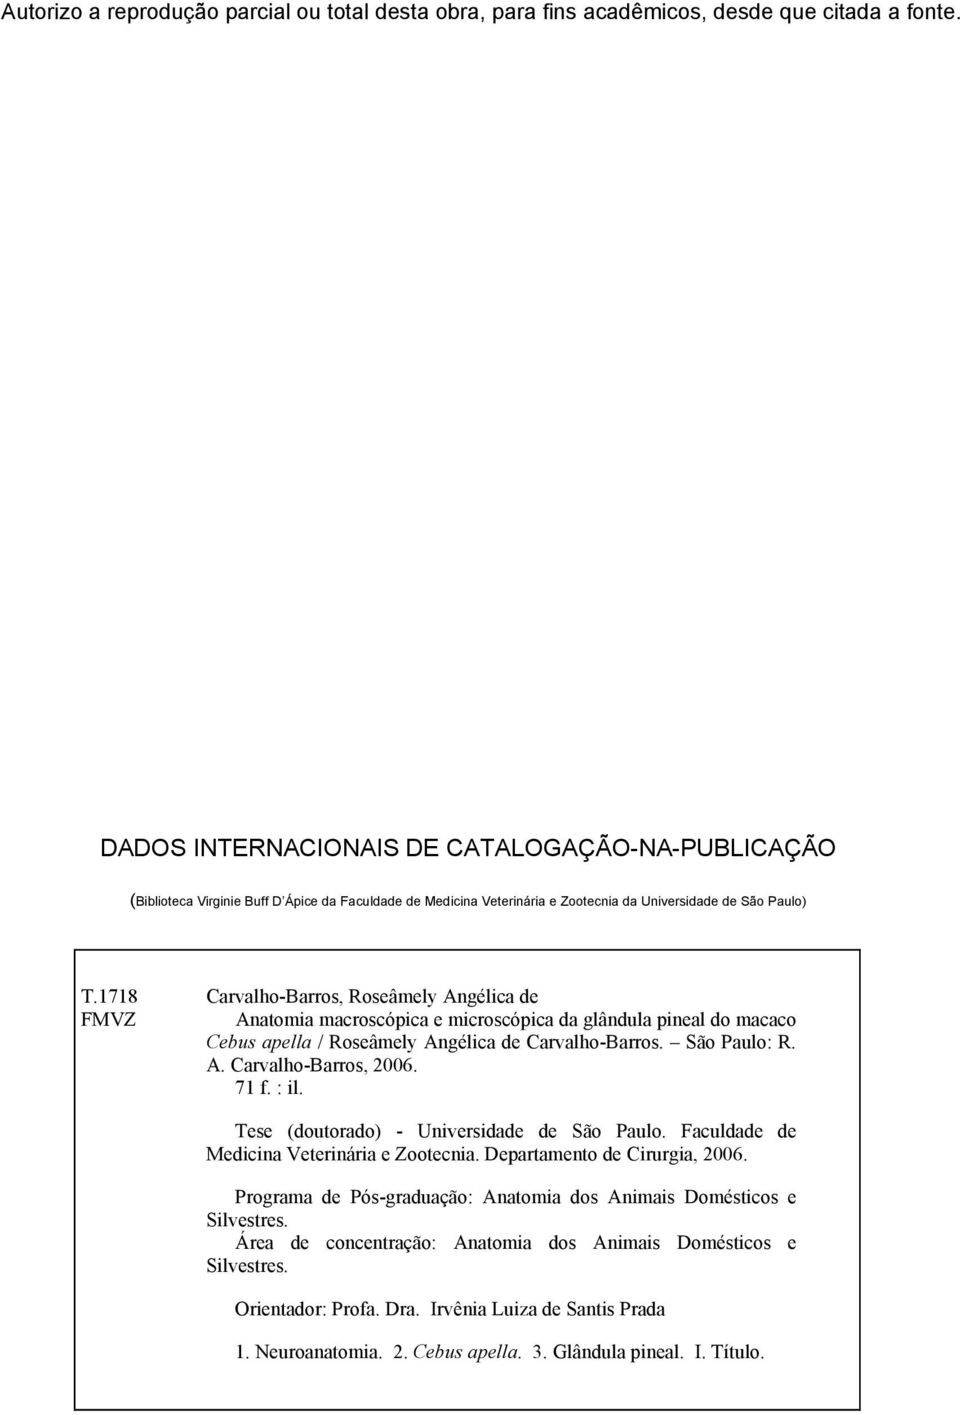 1718 Carvalho-Barros, Roseâmely Angélica de FMVZ Anatomia macroscópica e microscópica da glândula pineal do macaco Cebus apella / Roseâmely Angélica de Carvalho-Barros. São Paulo: R. A. Carvalho-Barros, 2006.